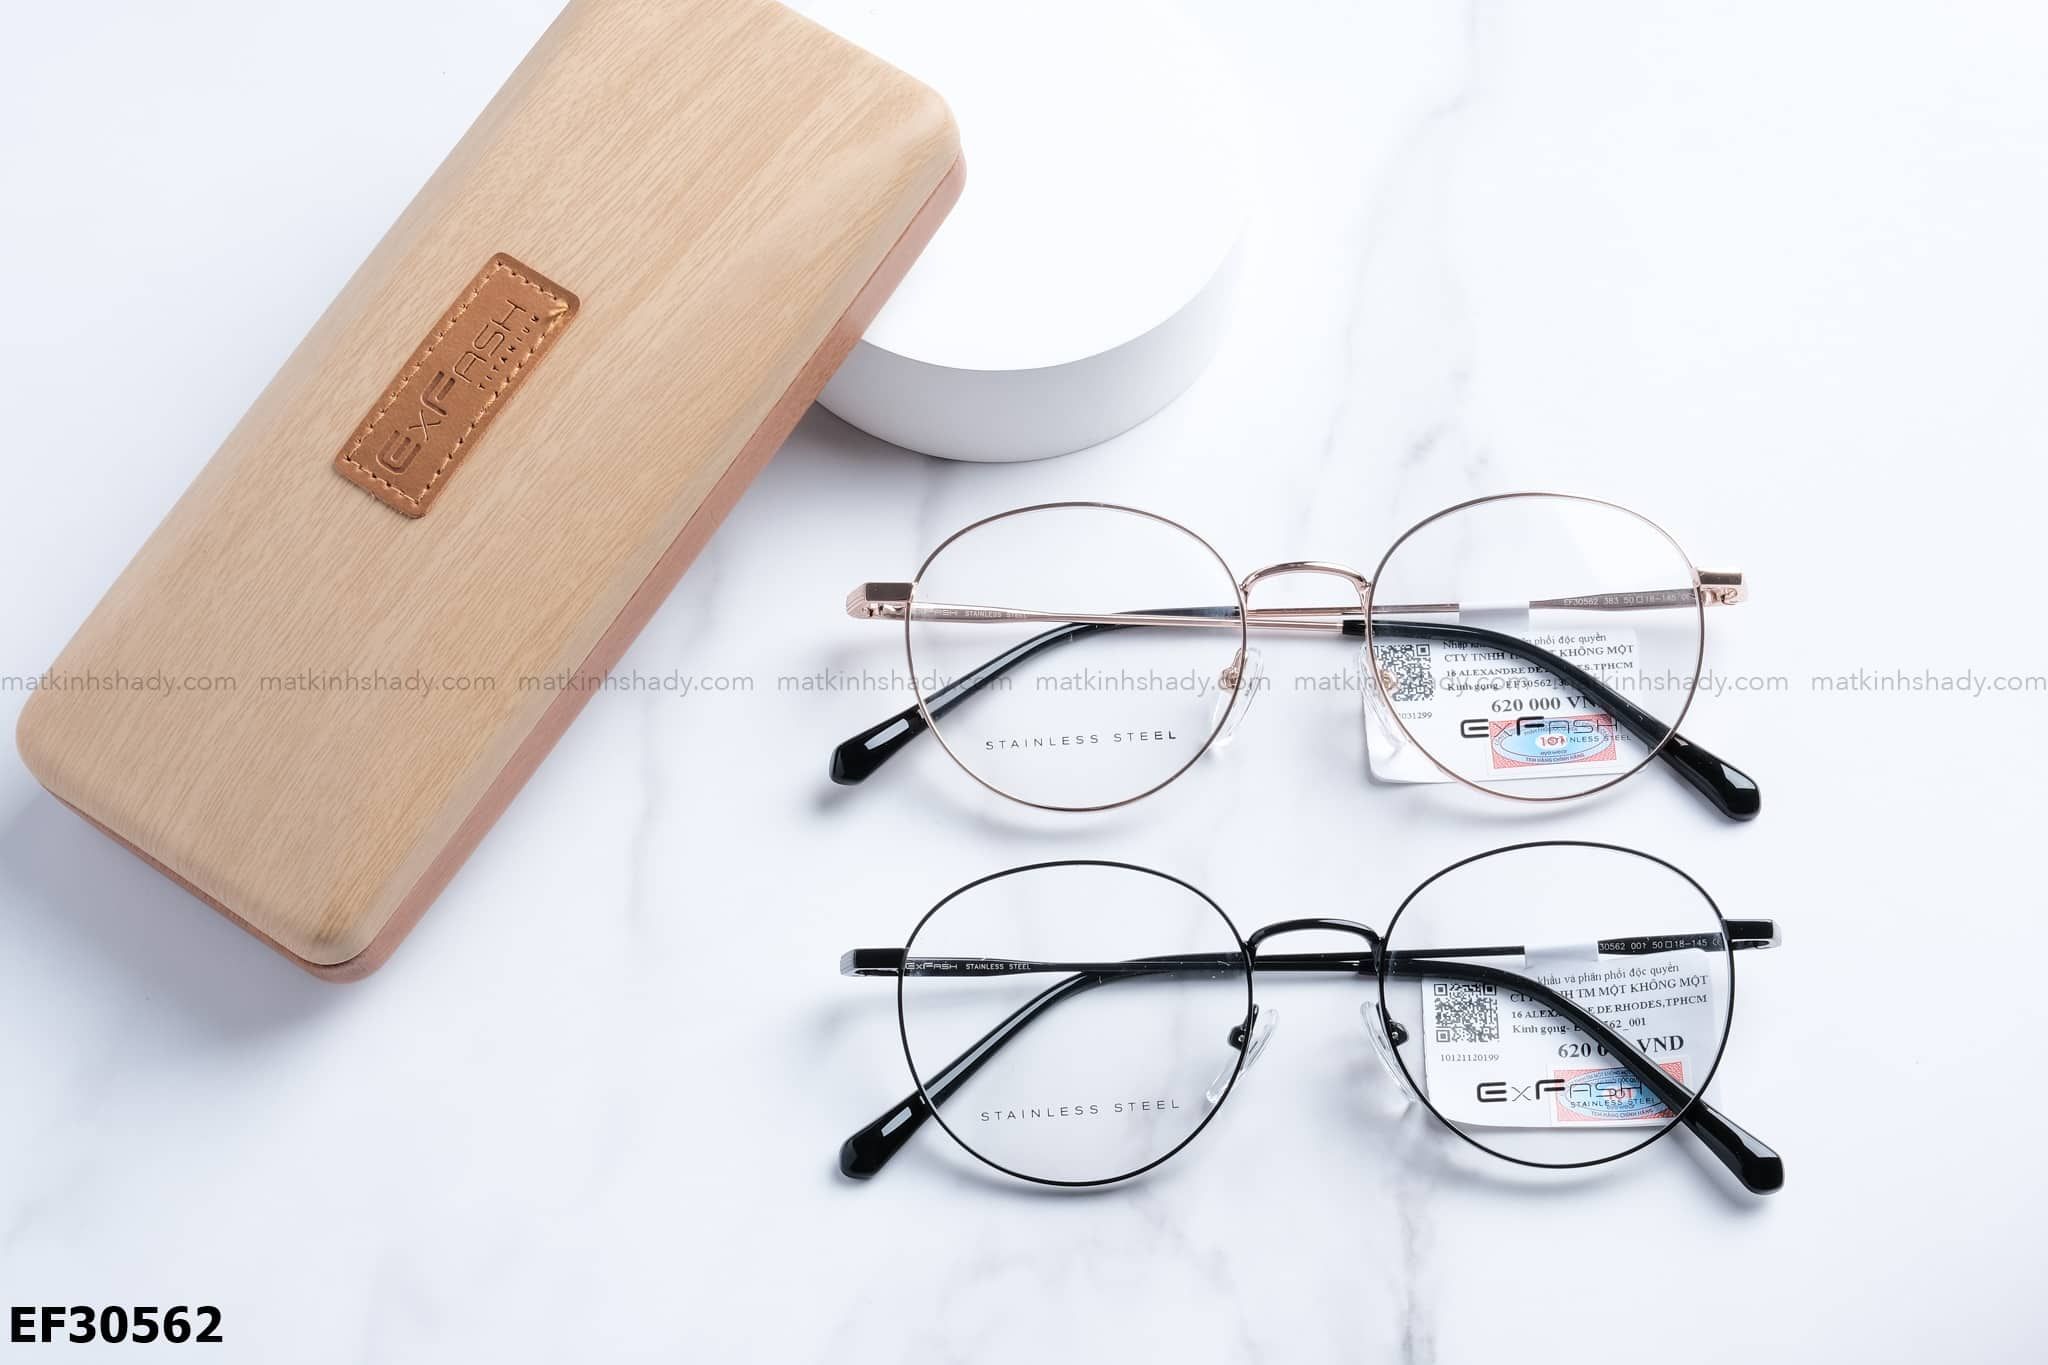  Exfash Eyewear - Glasses - EF30562 